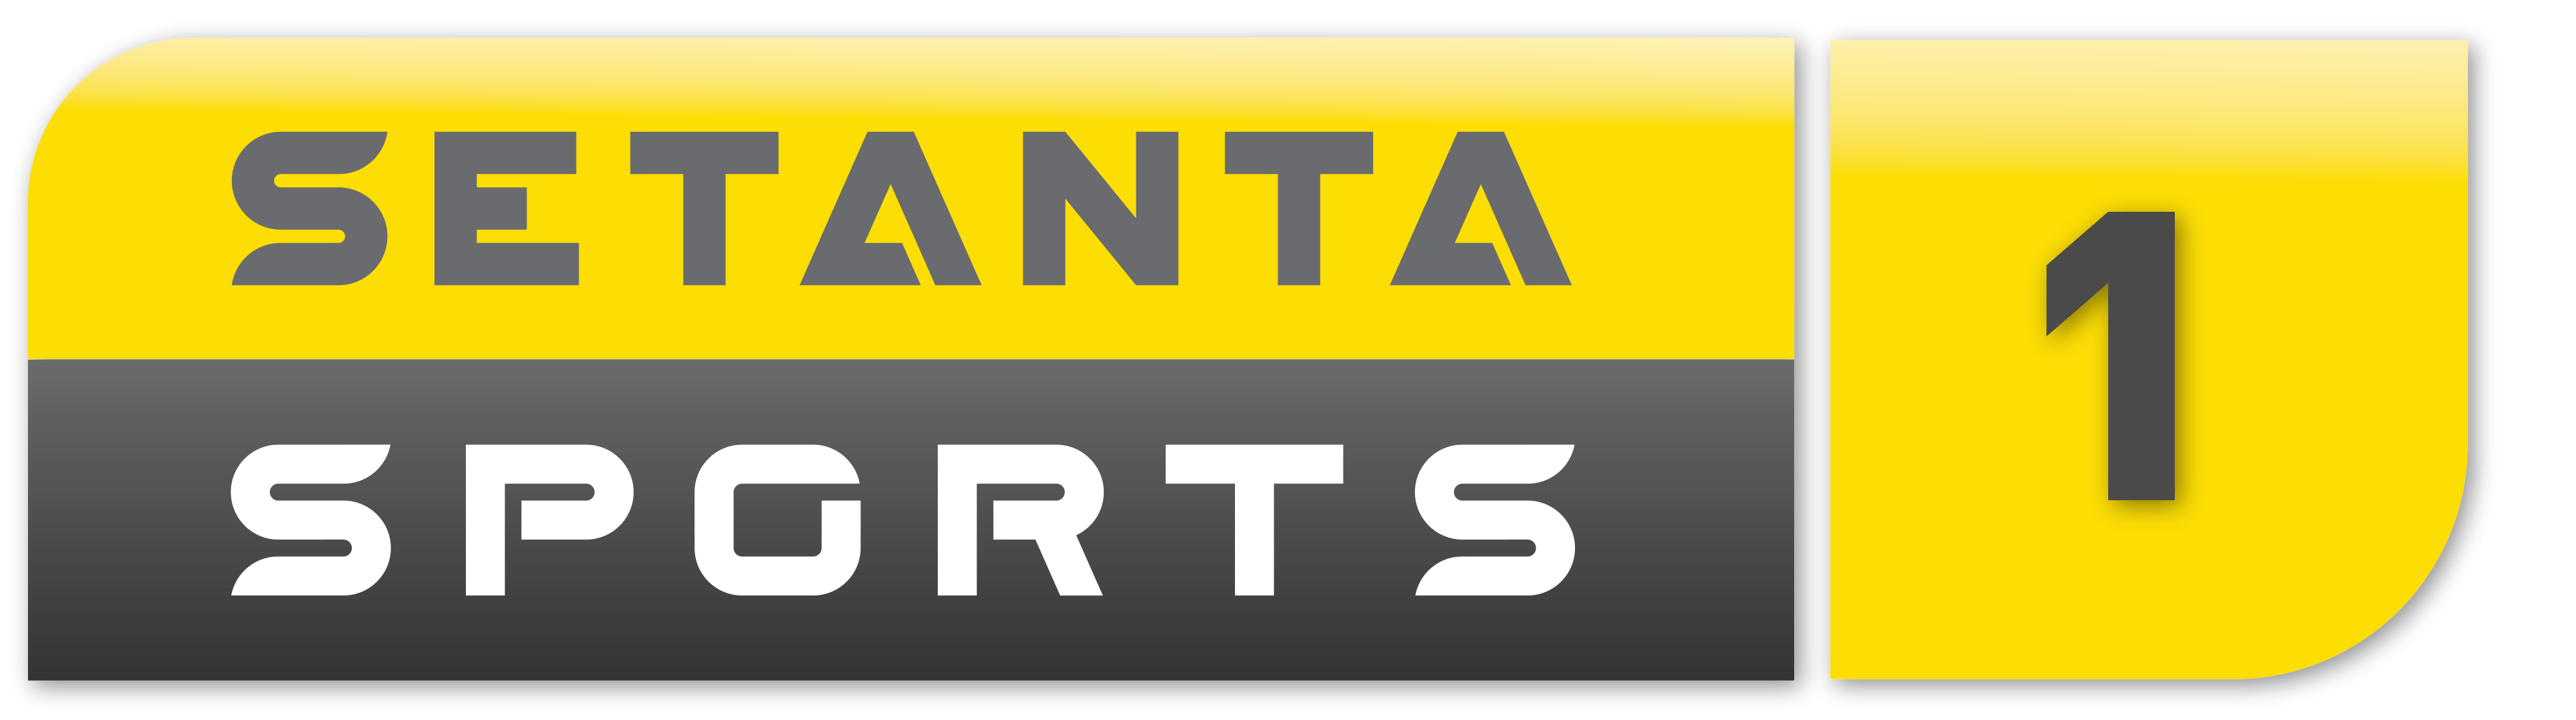 Setanta sport 1 Eurasia HD